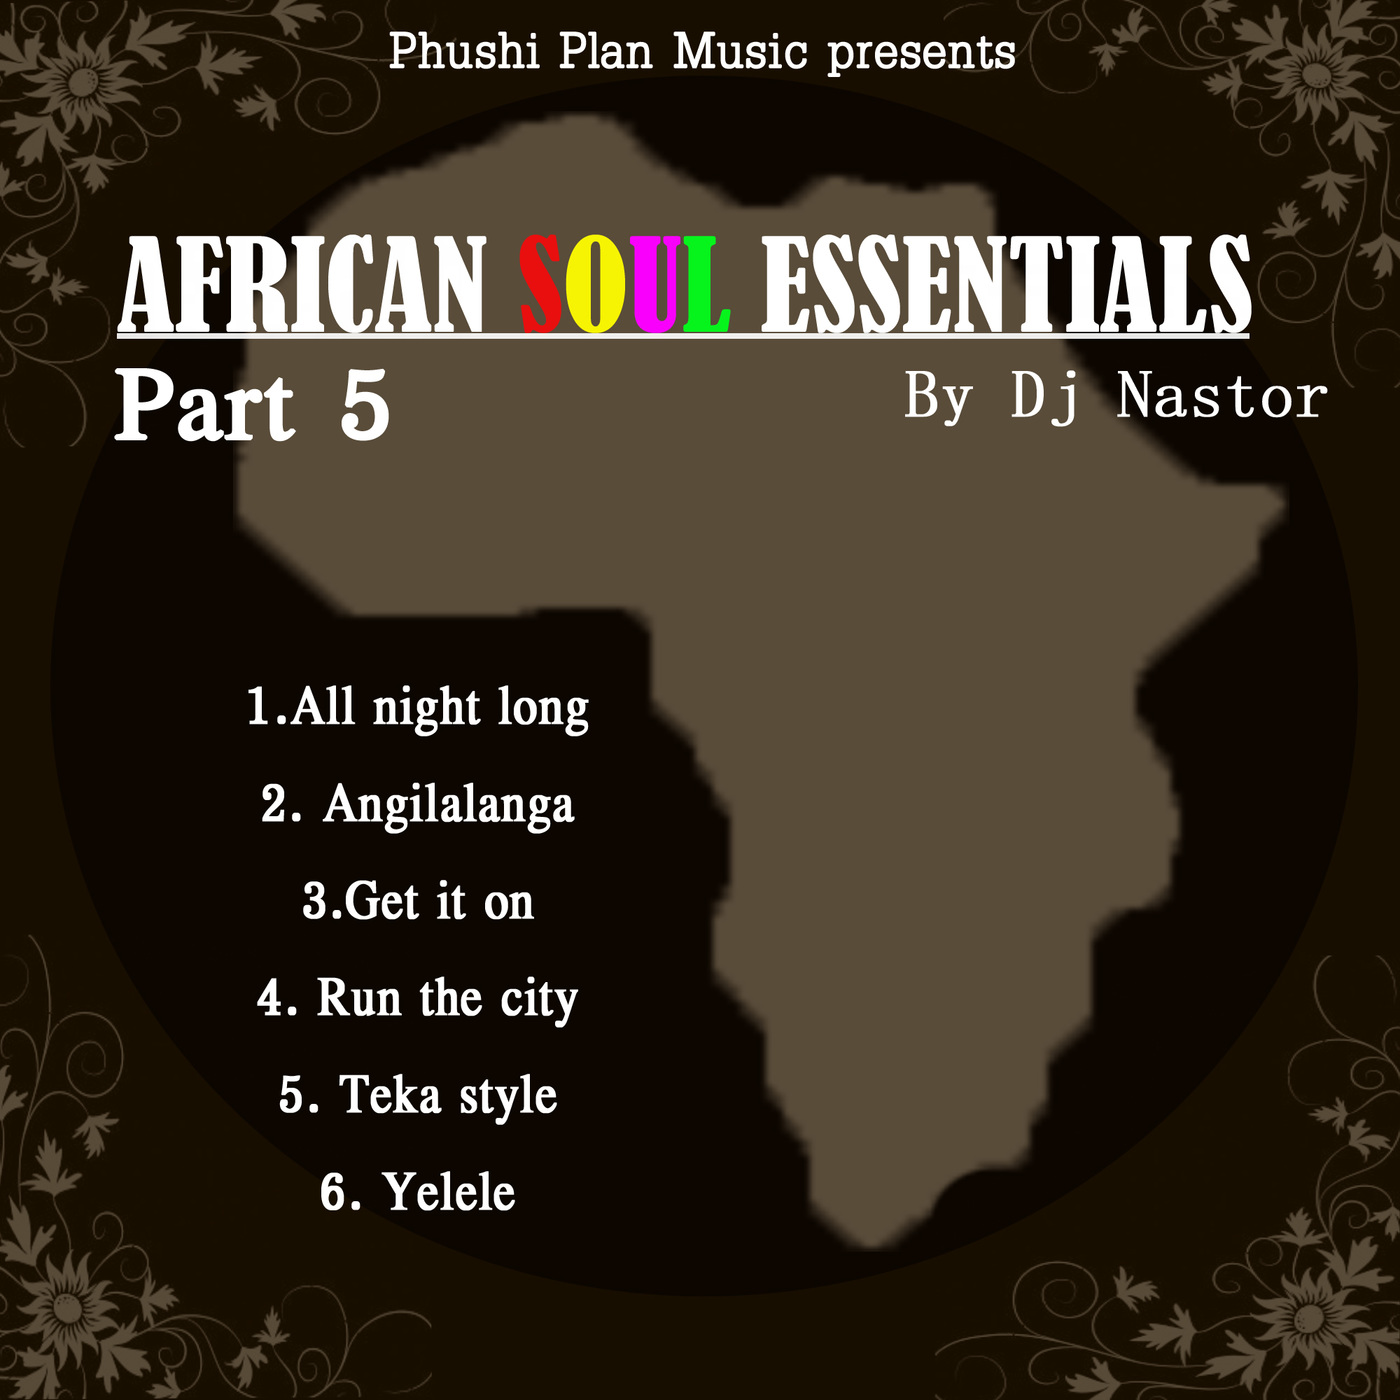 Dj Nastor - African Soul Essentials Part 5 / Phushi Plan music